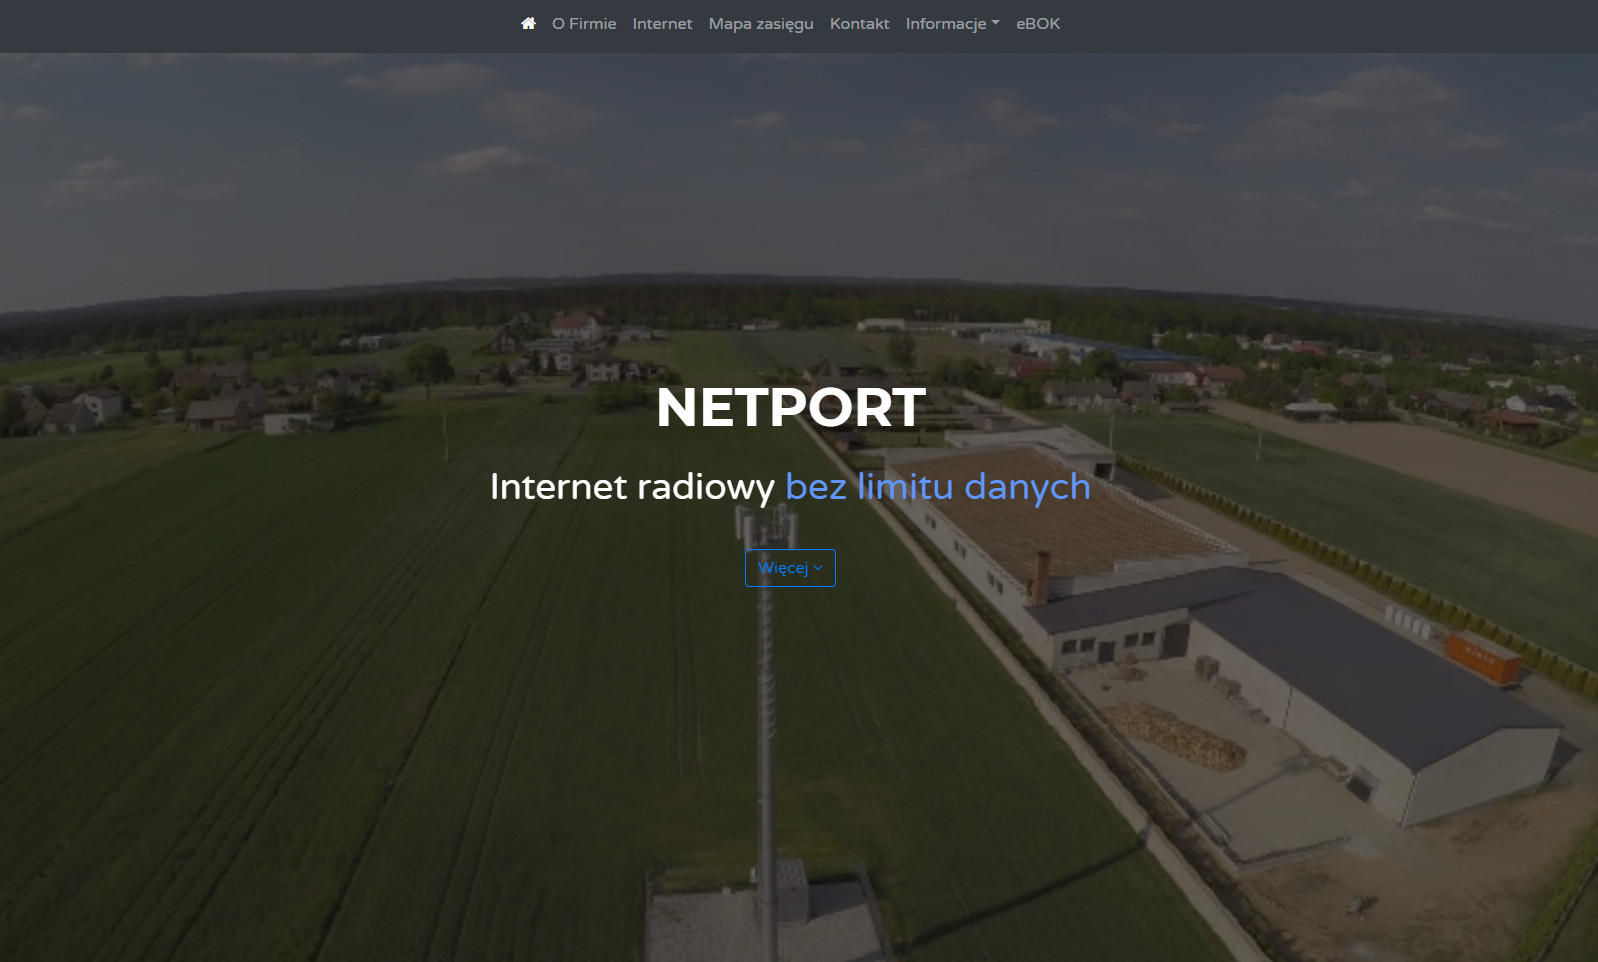 Netport